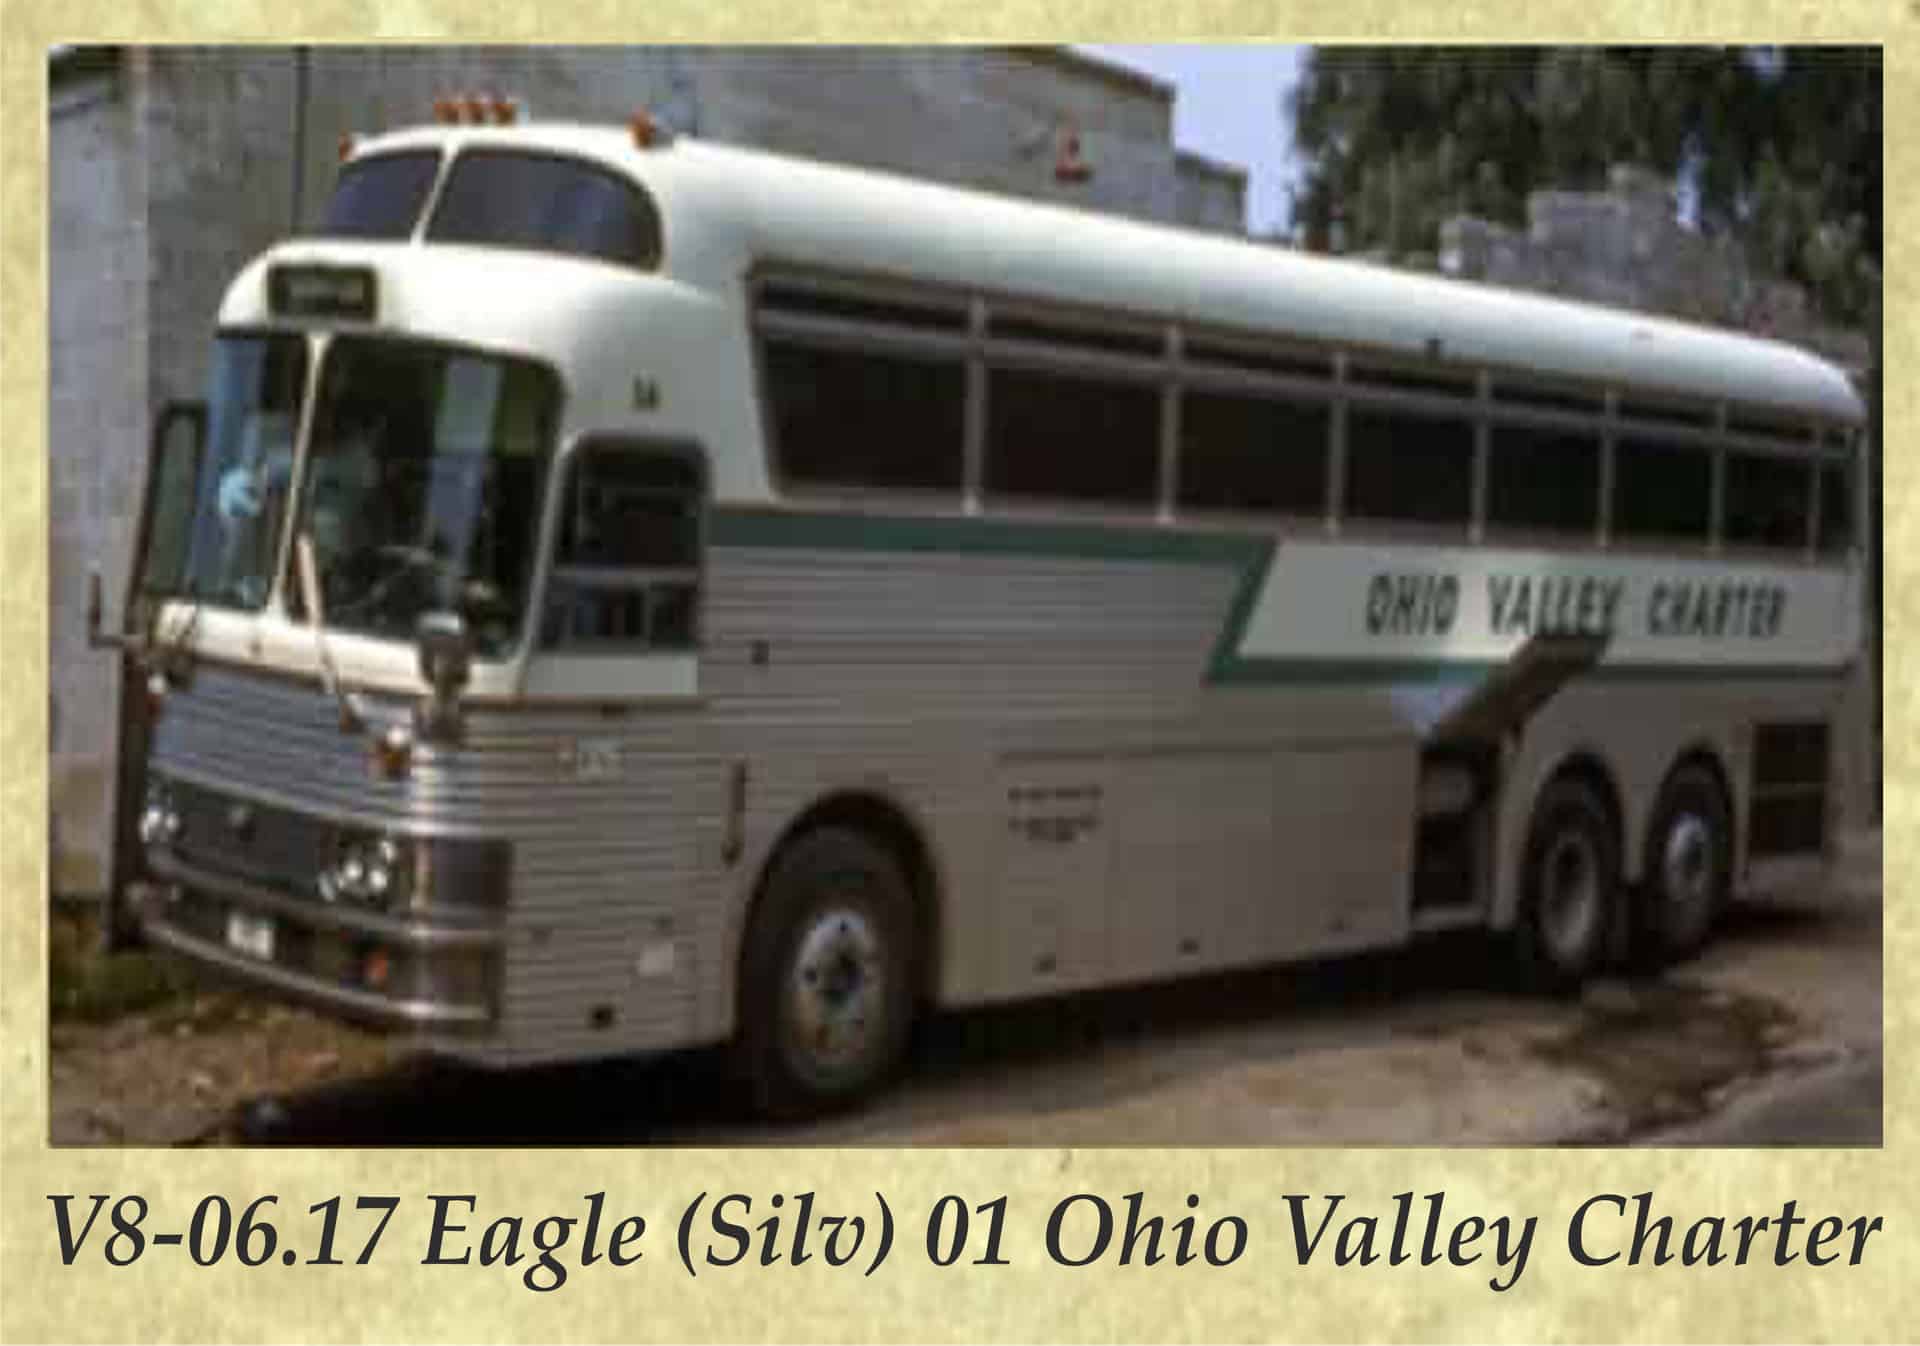 V8-06.17 Eagle (Silv) 01 Ohio Valley Charter